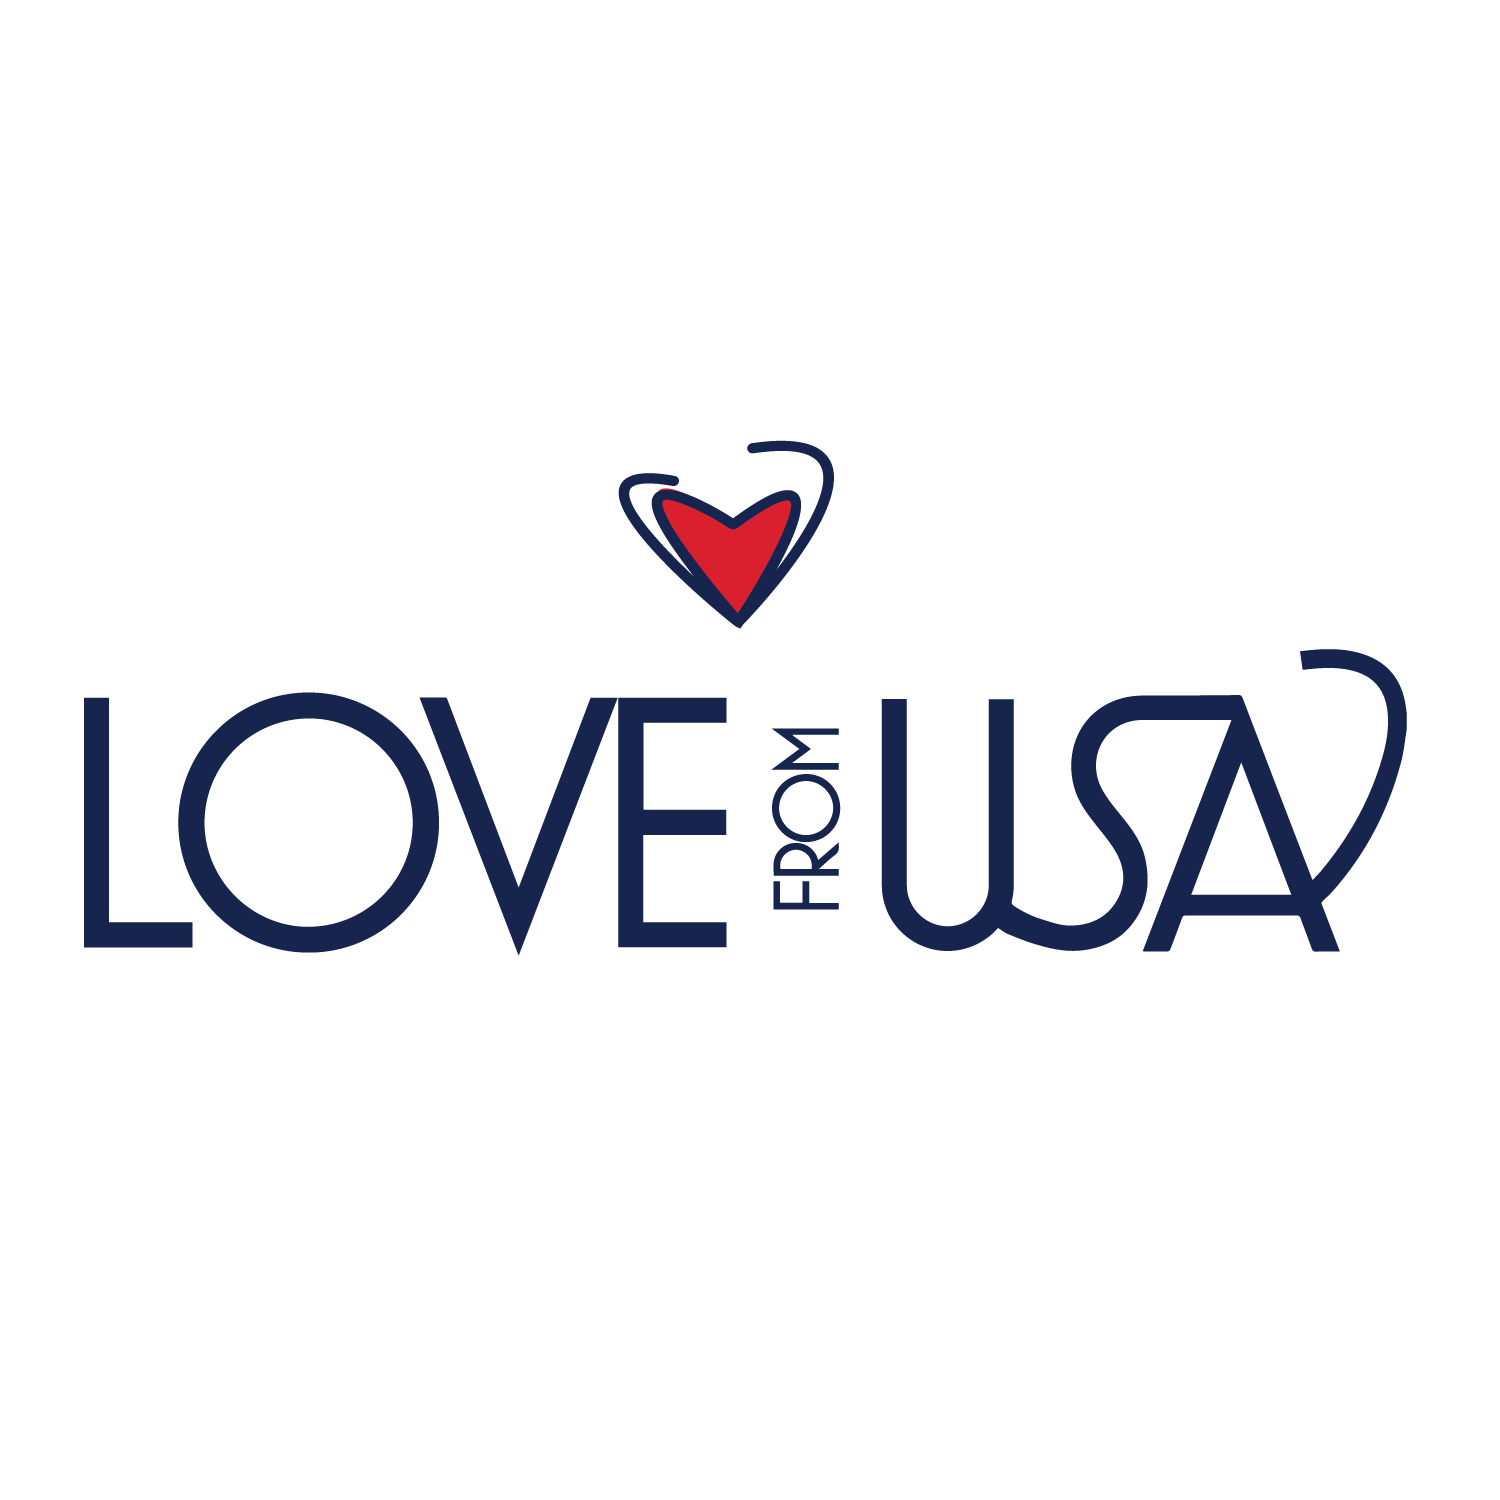 Love From USA, Minnesota, Chicago, Colorado